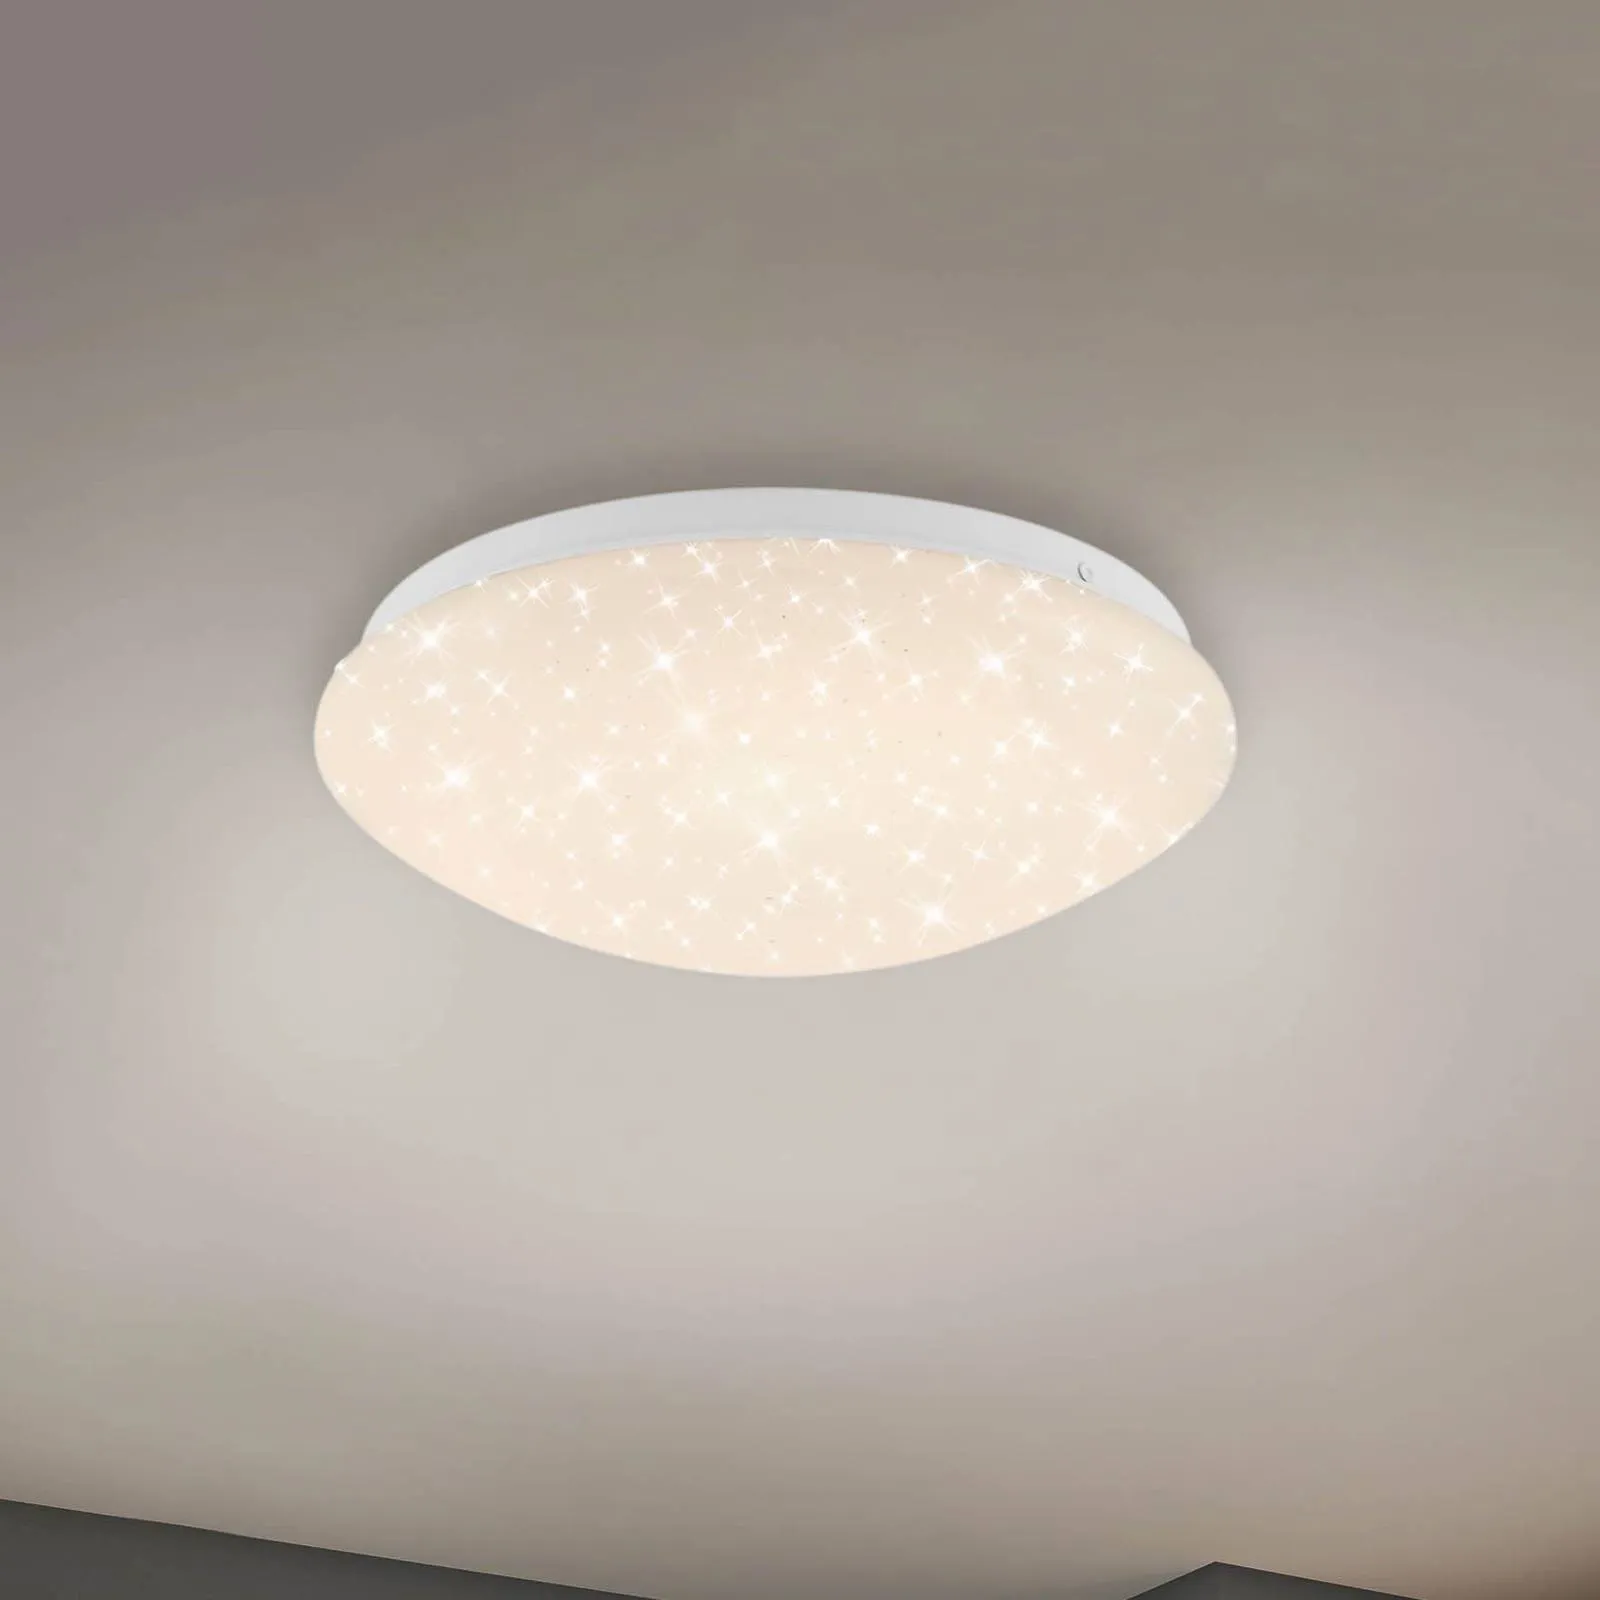 3256-016 LED ceiling light, star decoration RGBW